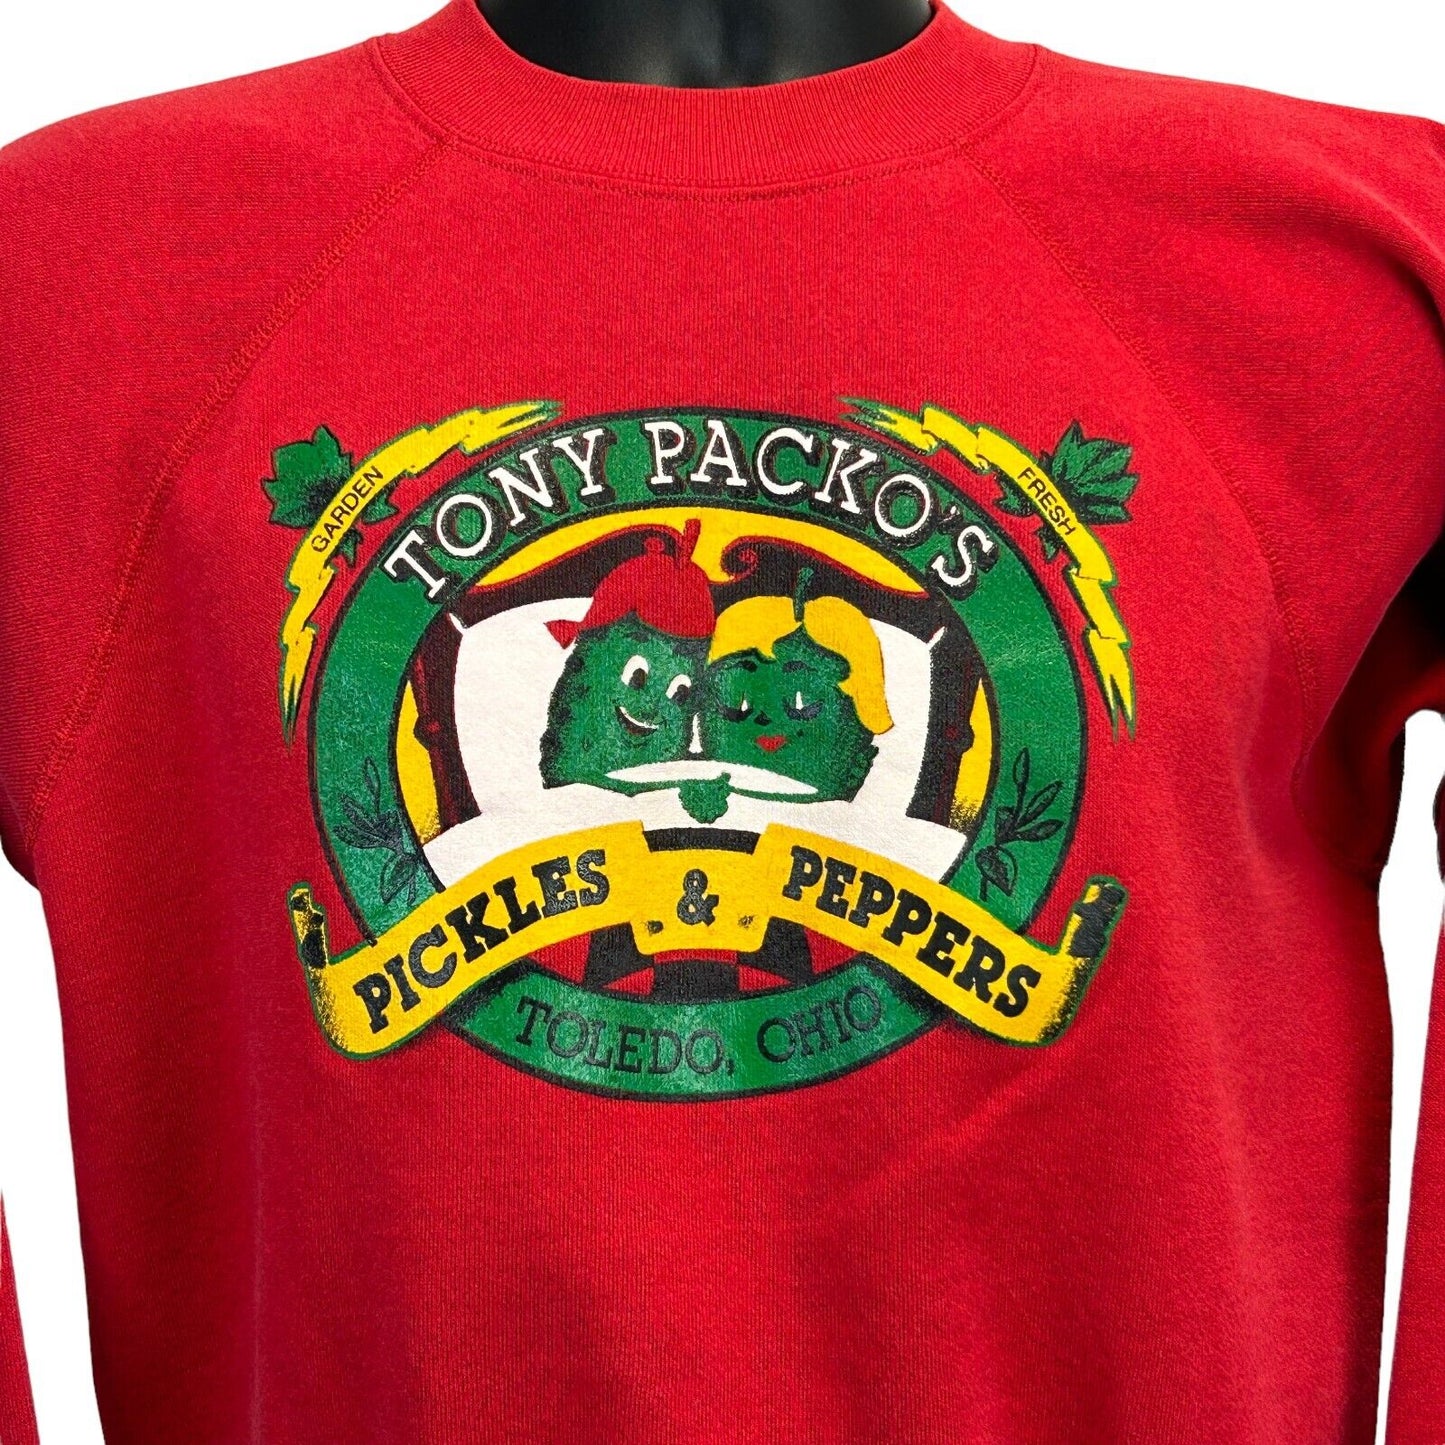 Tony Packo's Pickles & Peppers Vintage 90s Sweatshirt Toledo Ohio USA Made Small